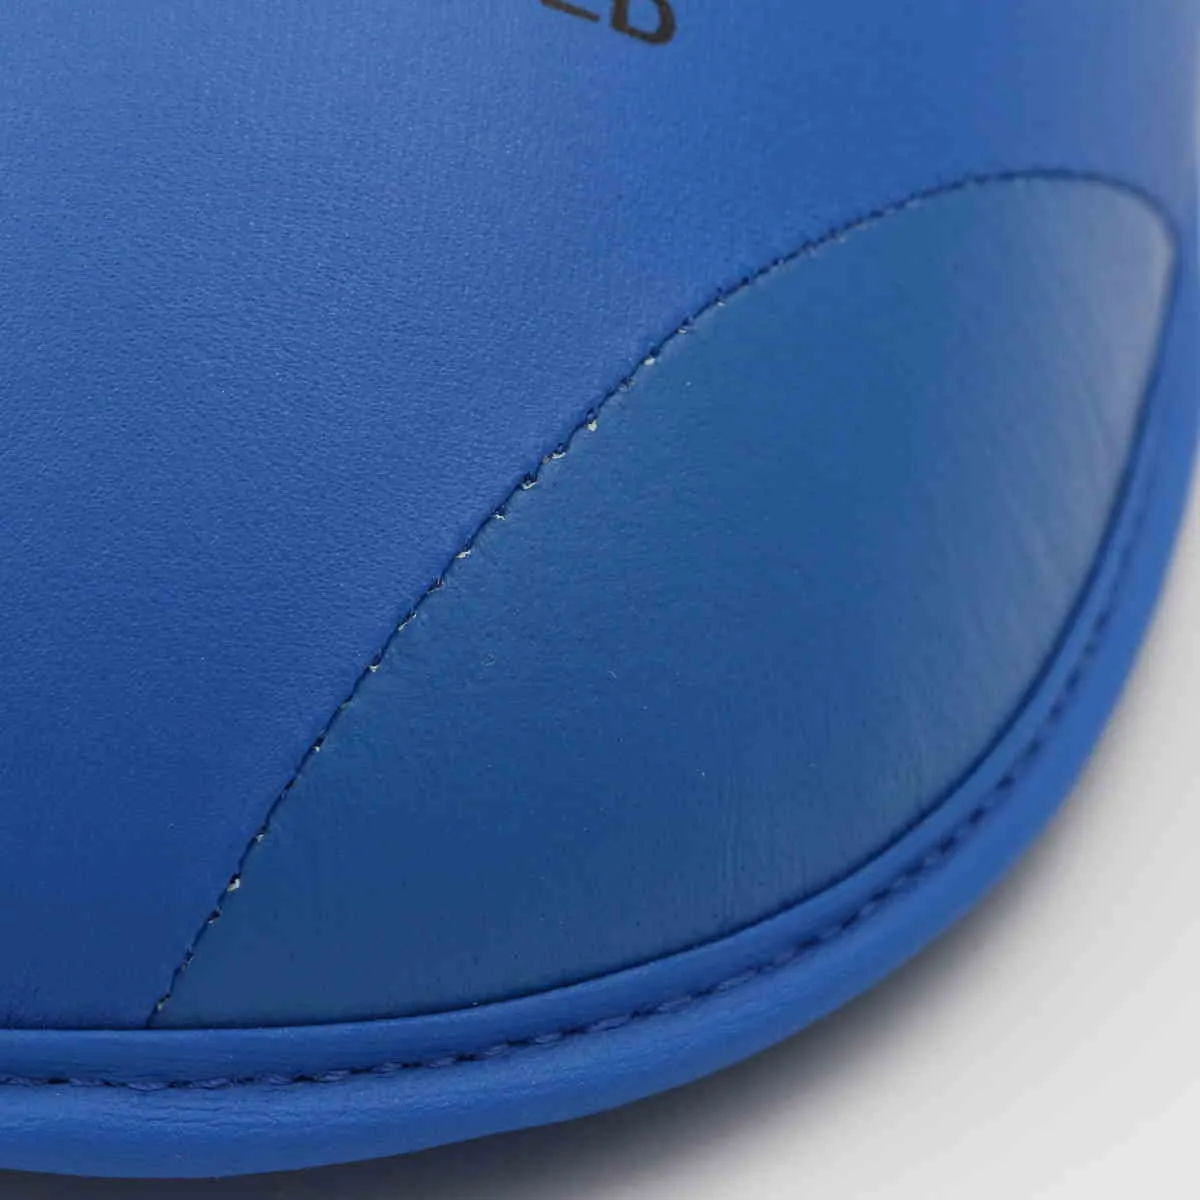 Adidas Protège-tibias Protège-cou-de-pieds WKF approved bleu